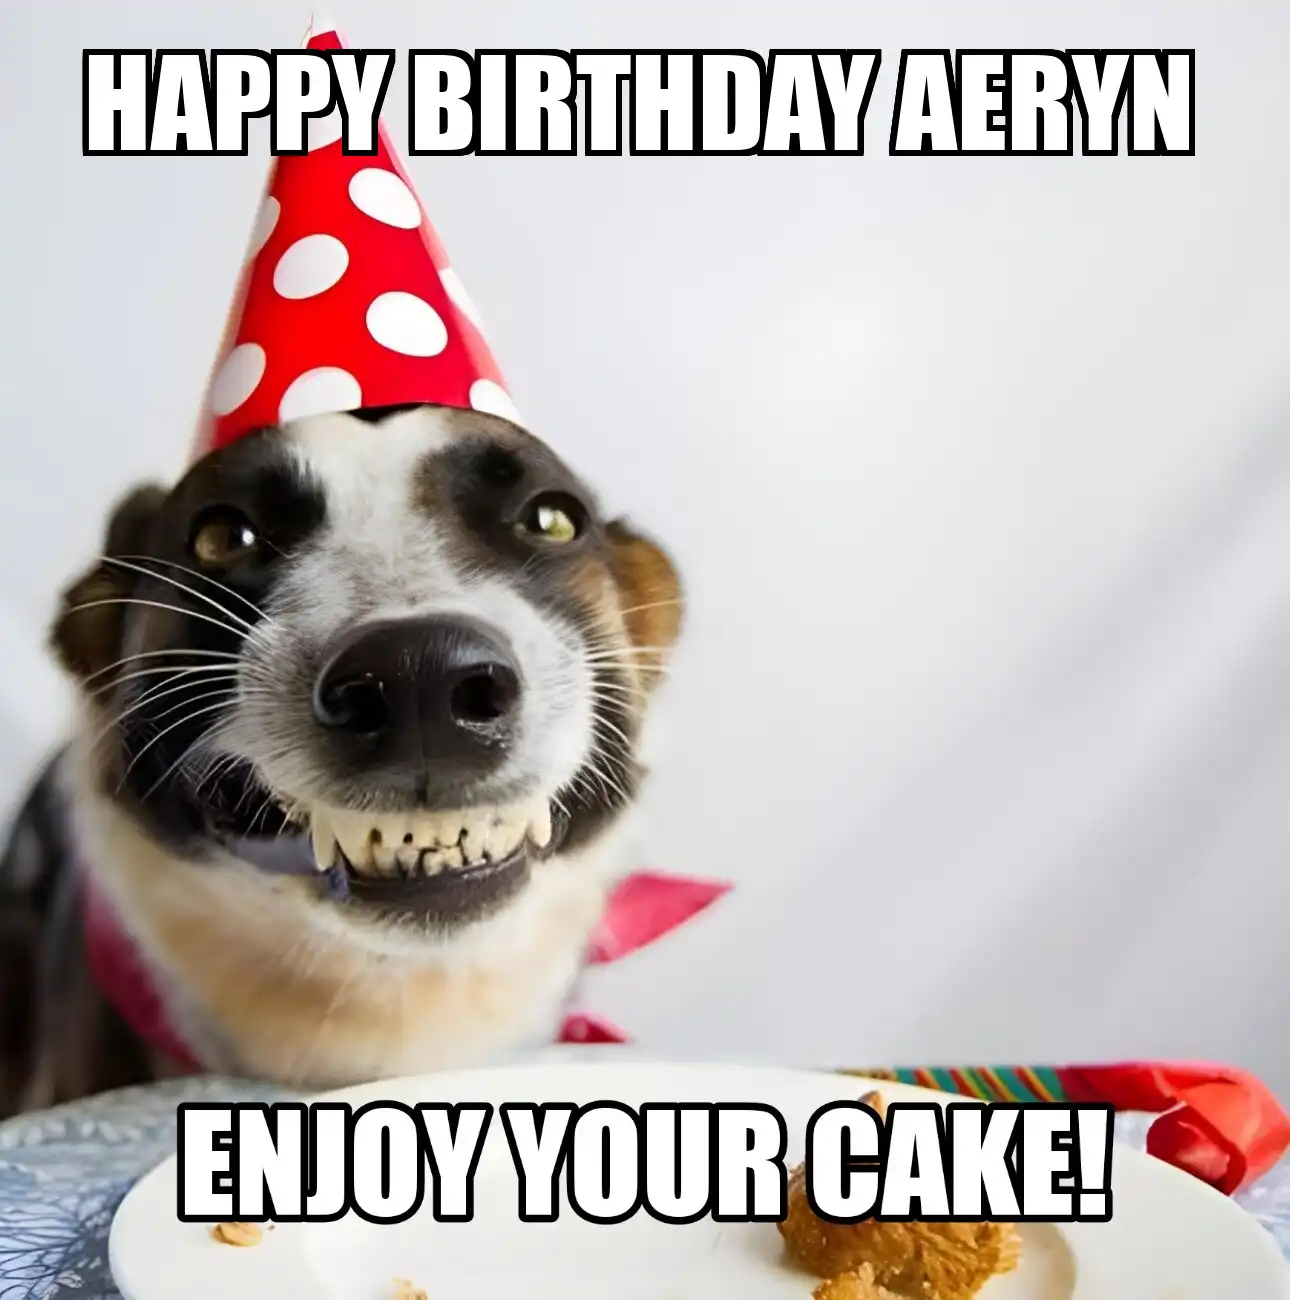 Happy Birthday Aeryn Enjoy Your Cake Dog Meme